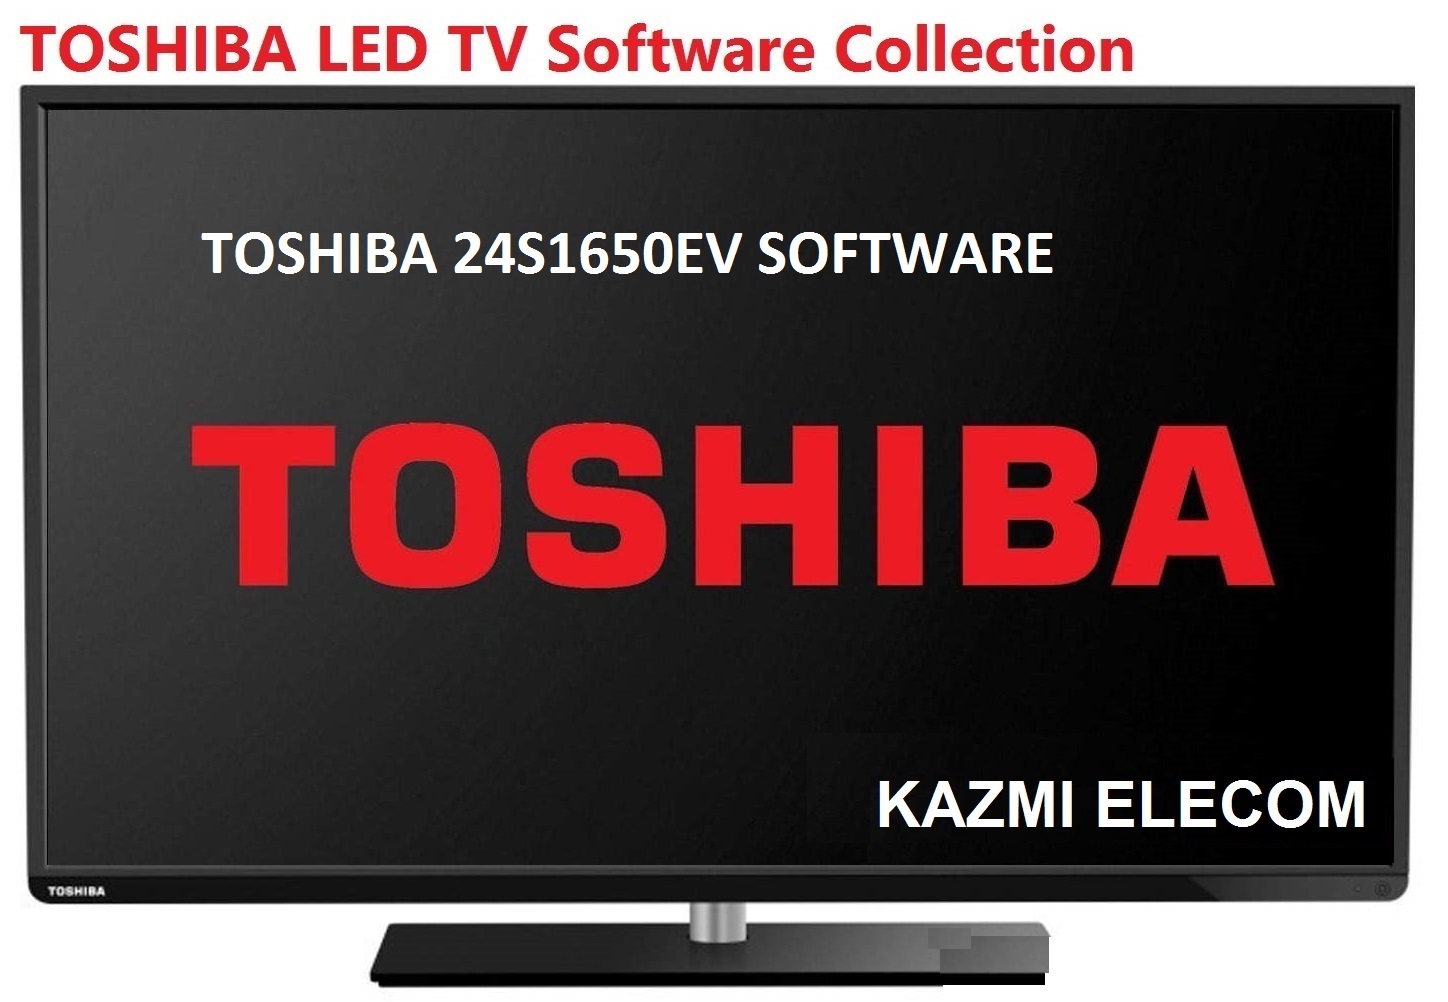 Toshiba 24S1650Ev